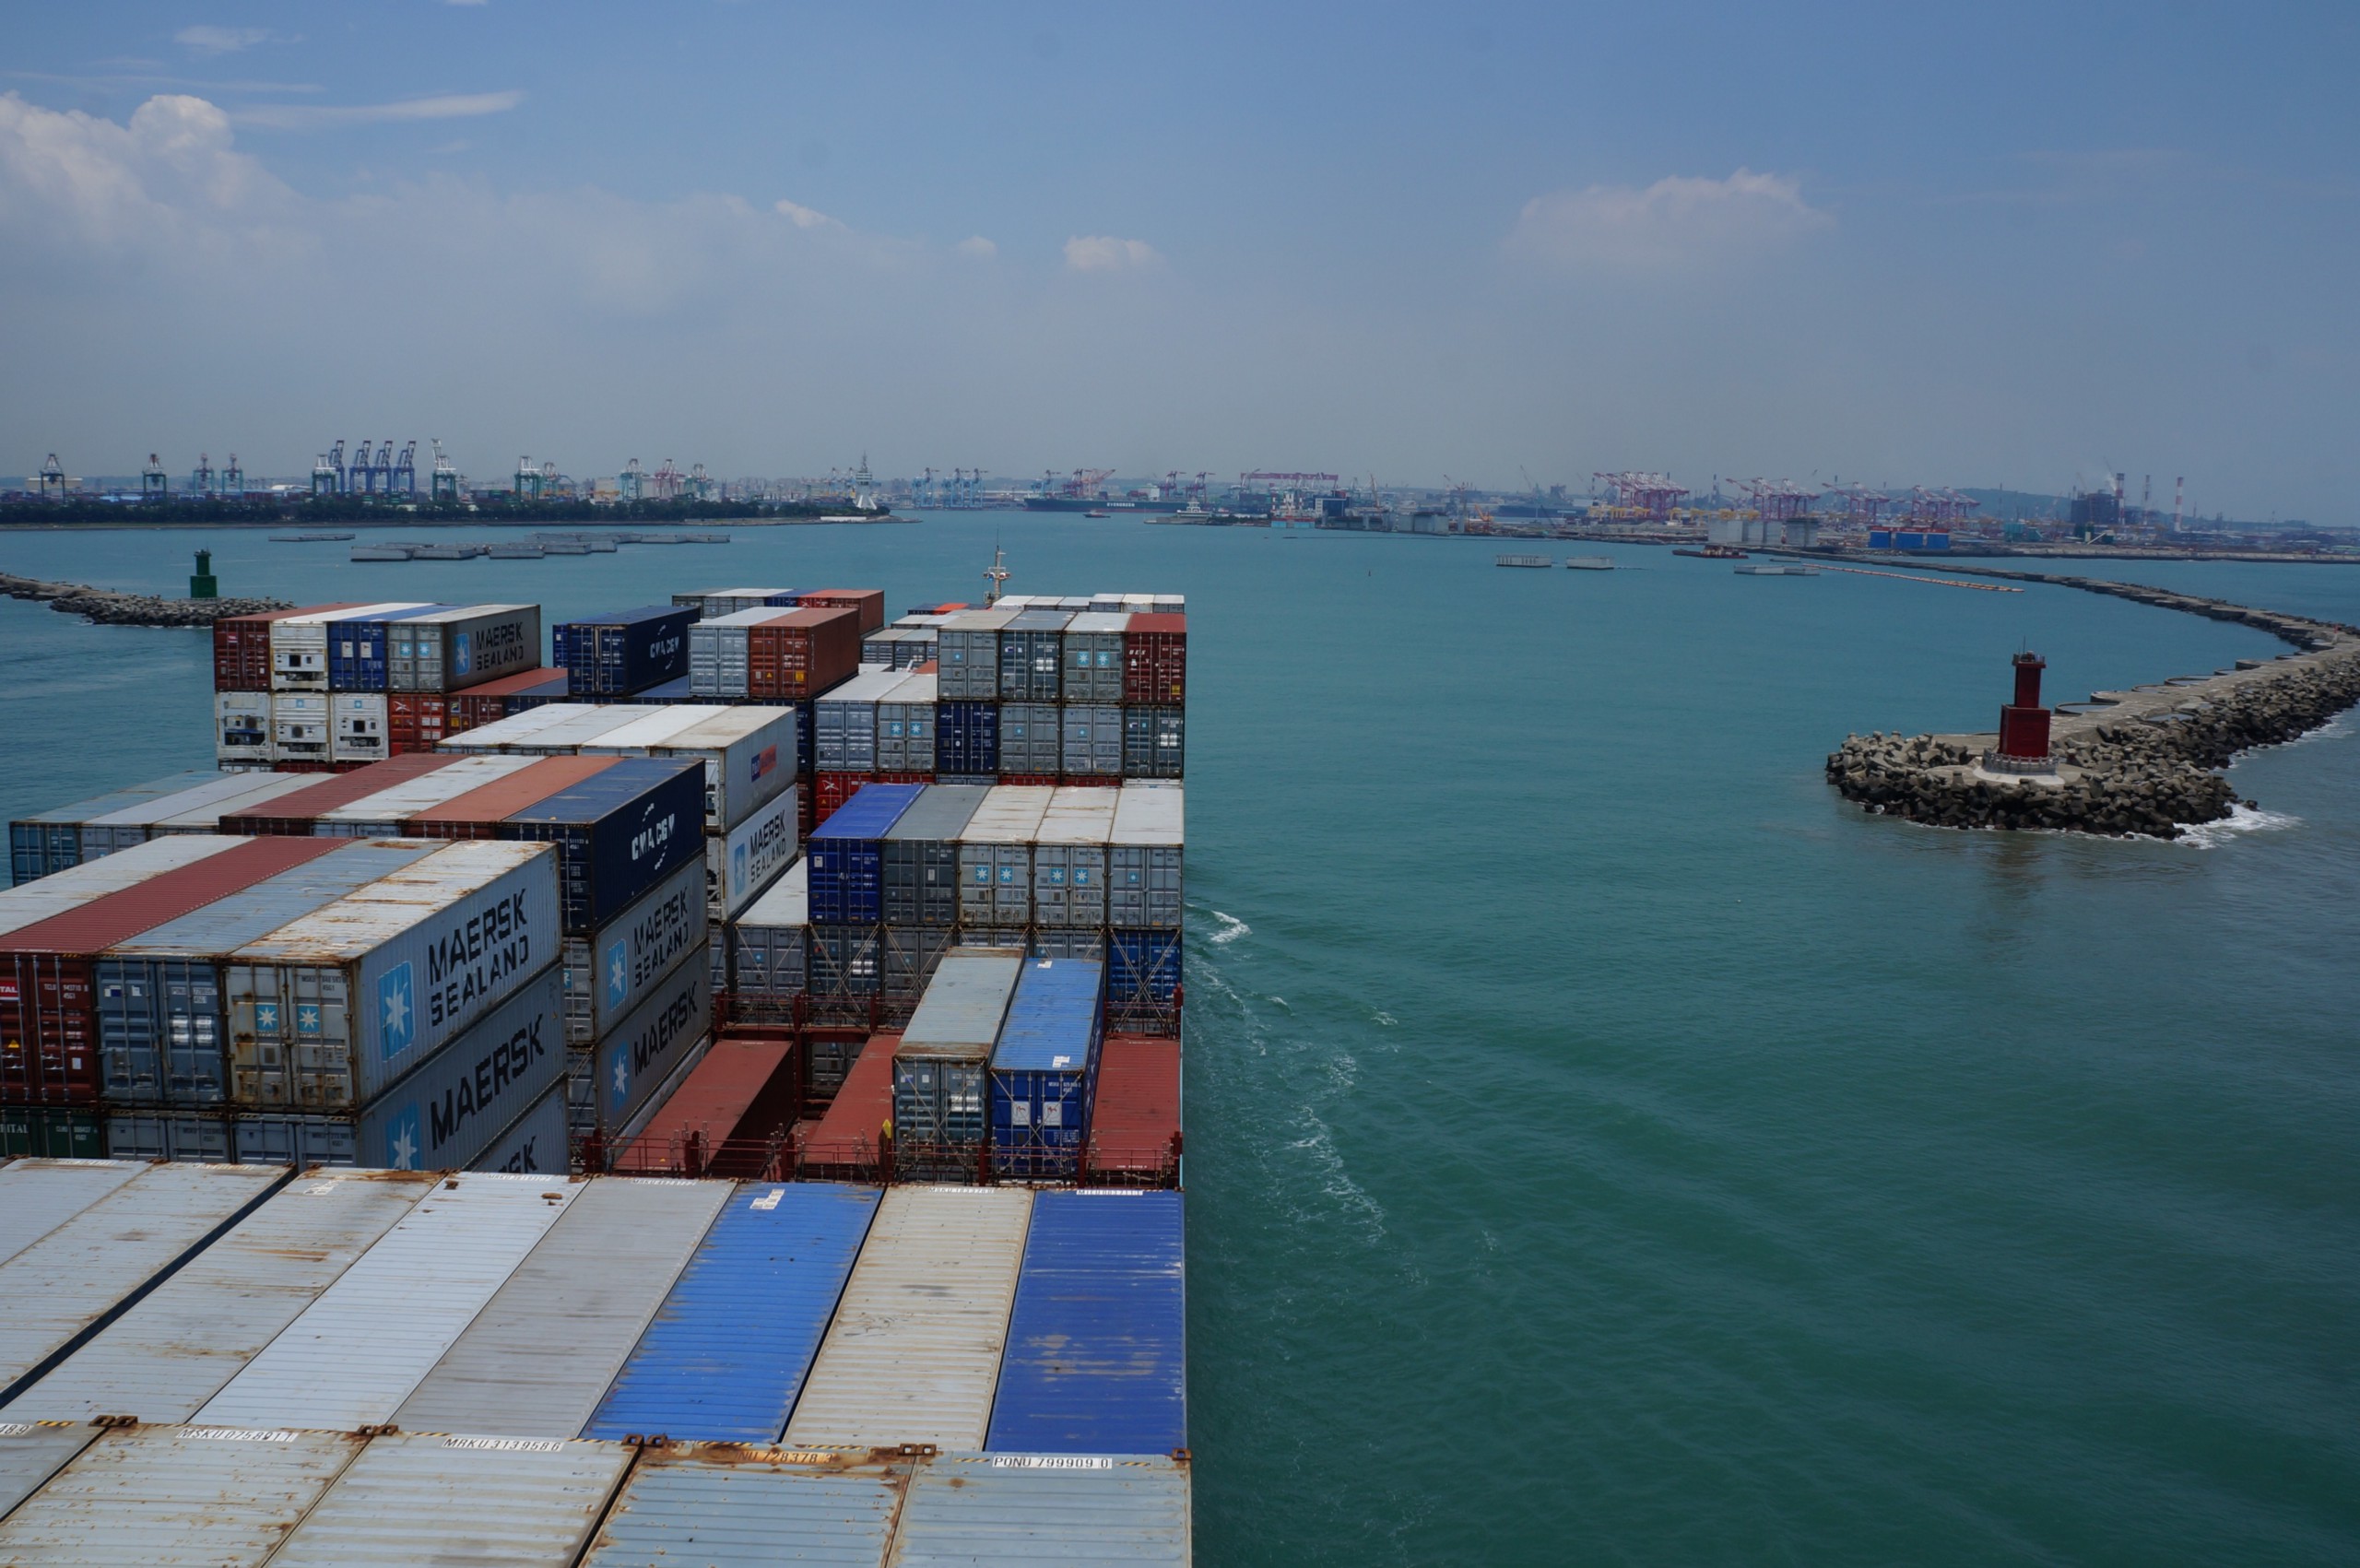 A container ship entering a port.